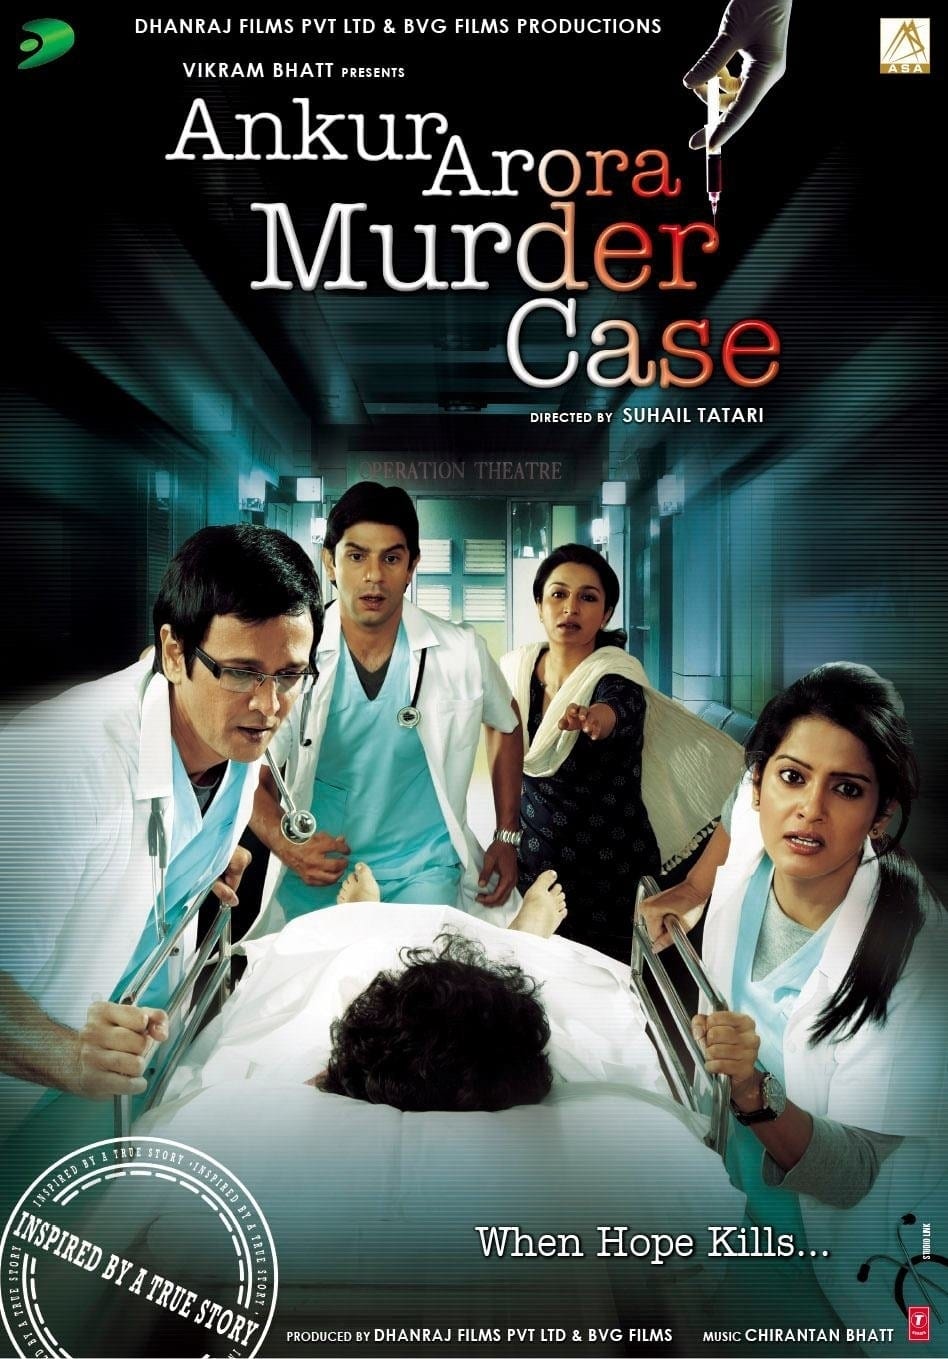 Poster for the movie "Ankur Arora Murder Case"